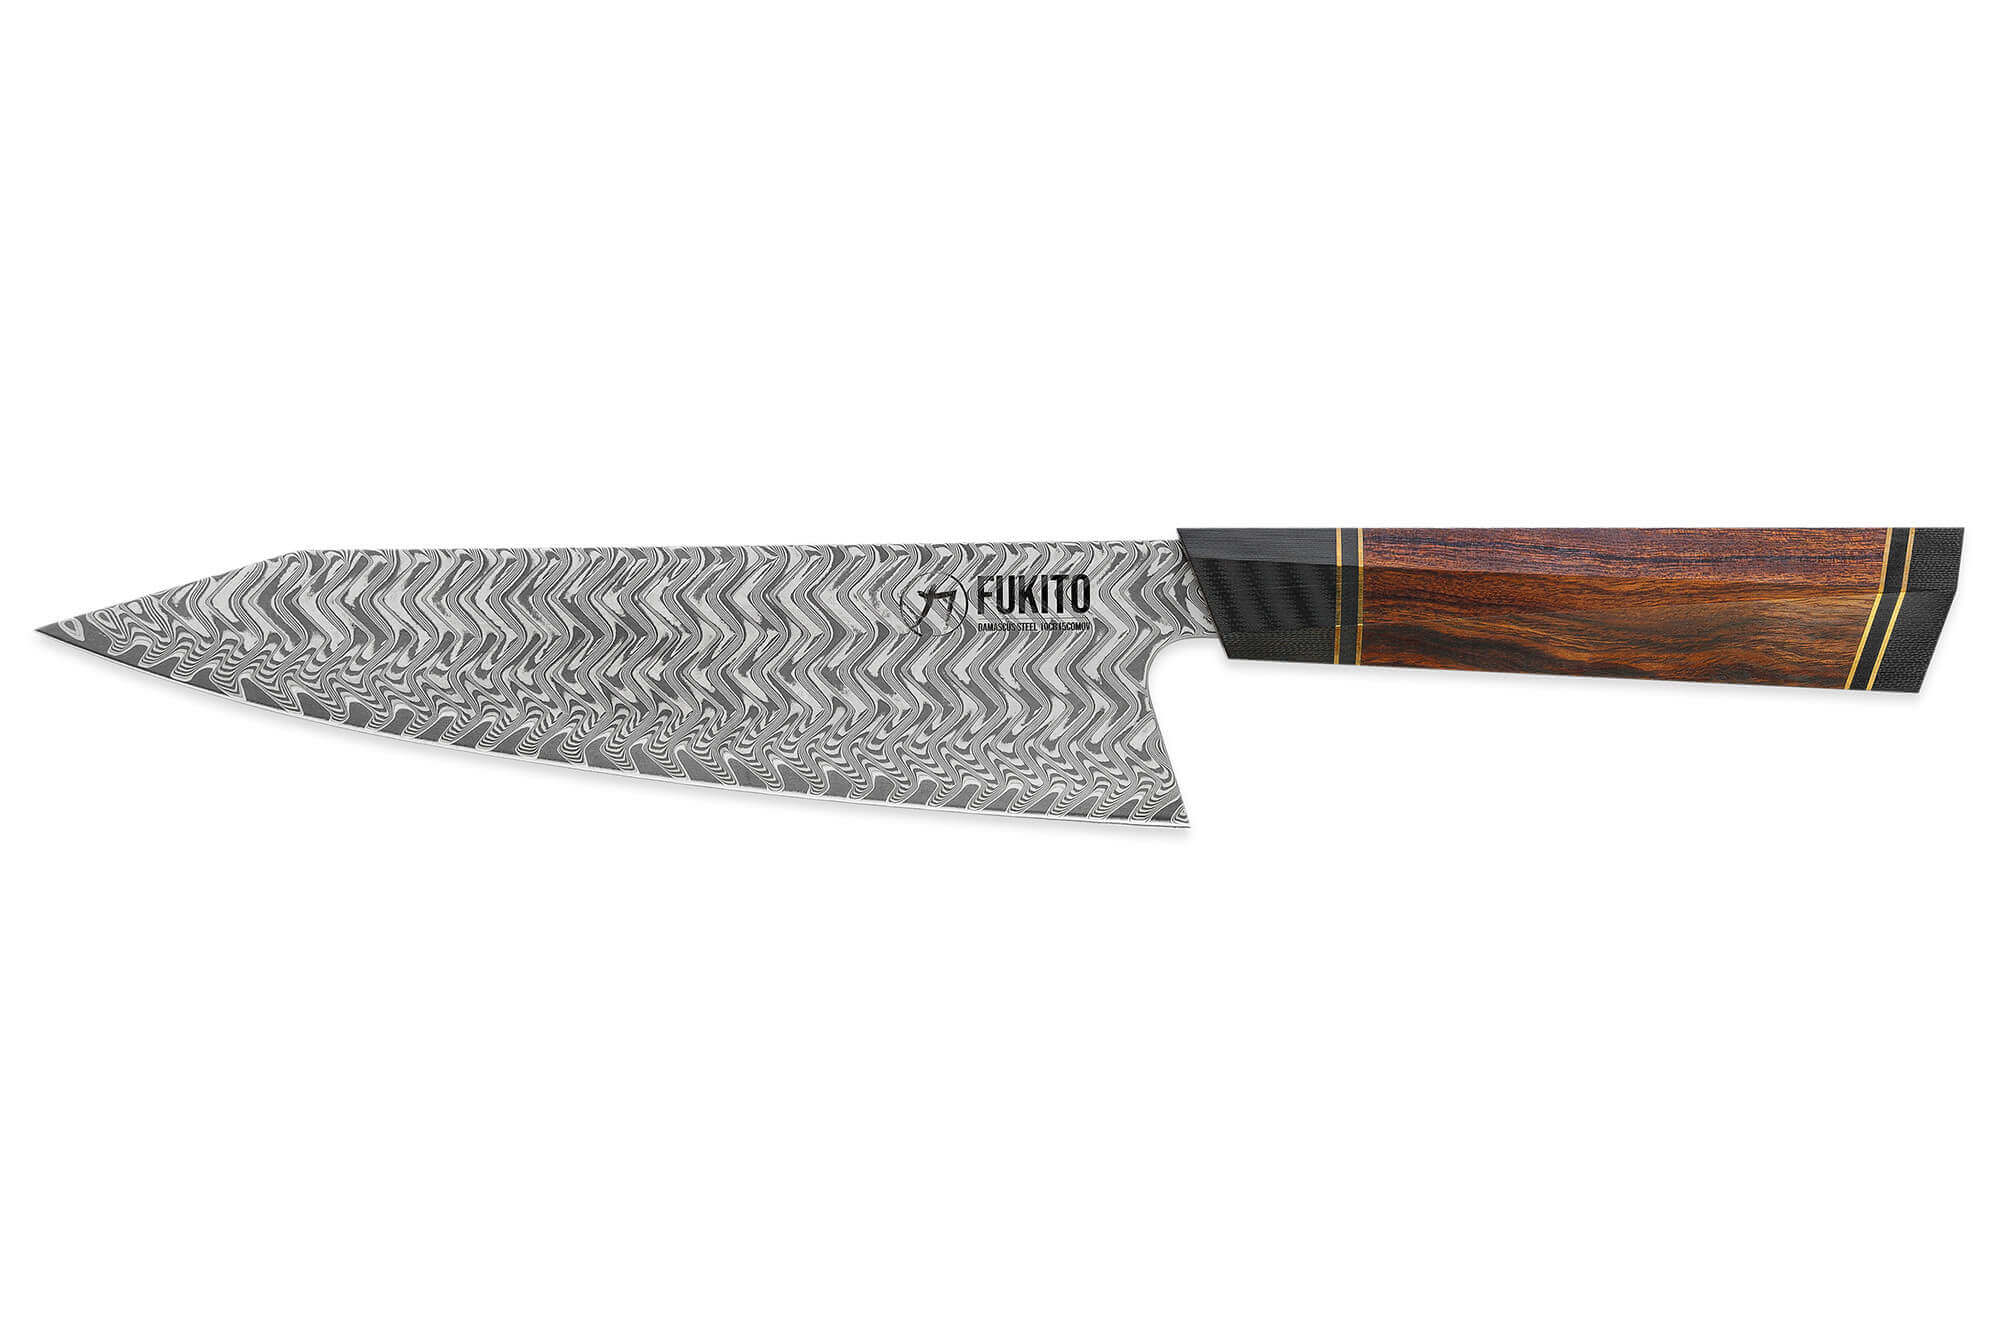 Fukito - Couteau de chef Desert Damas 67 couches 21cm